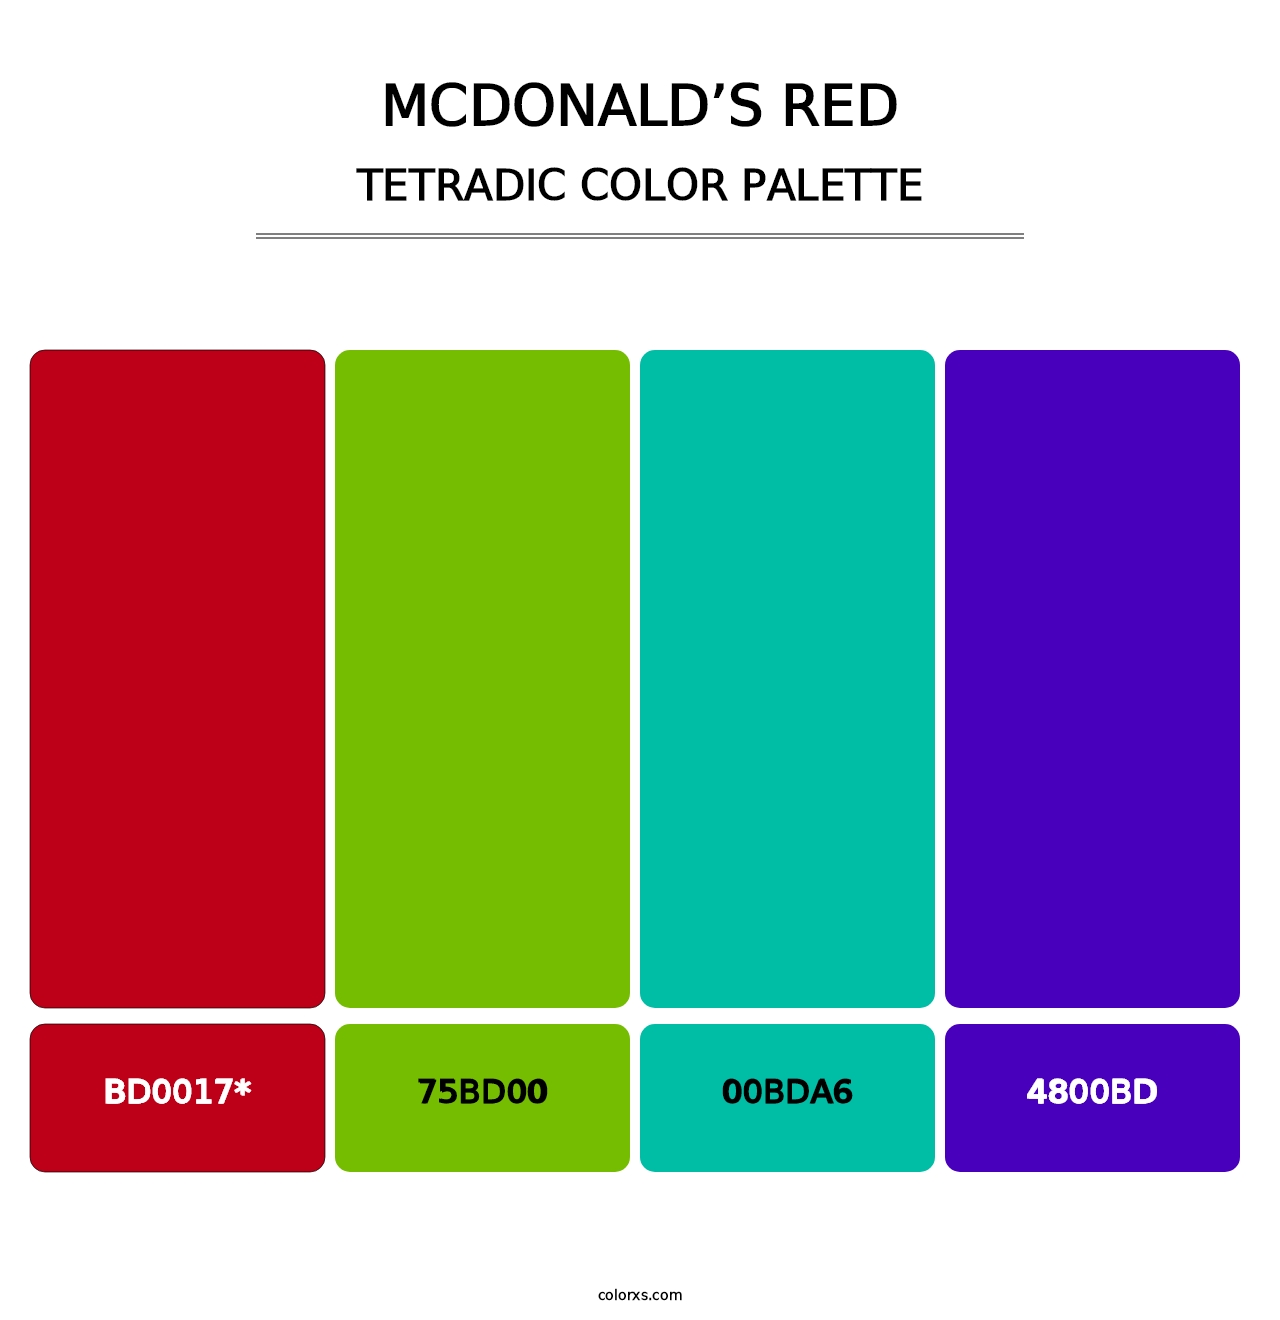 McDonald’s Red - Tetradic Color Palette